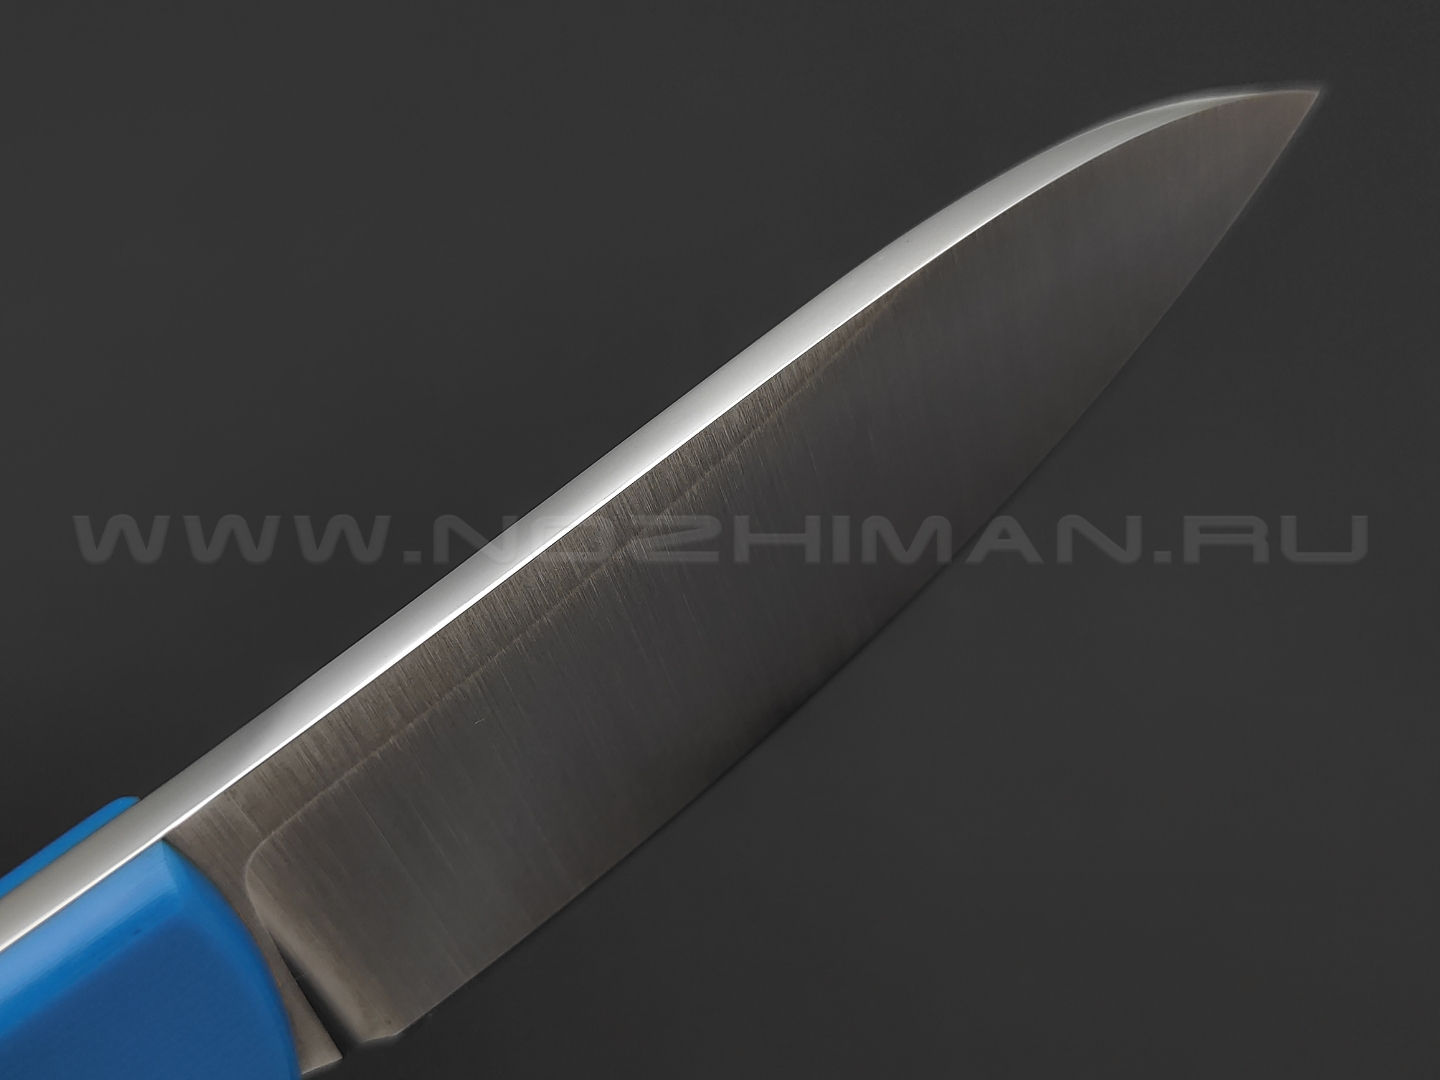 Zh KNIVES нож True сталь N690 сатин, рукоять G10 blue